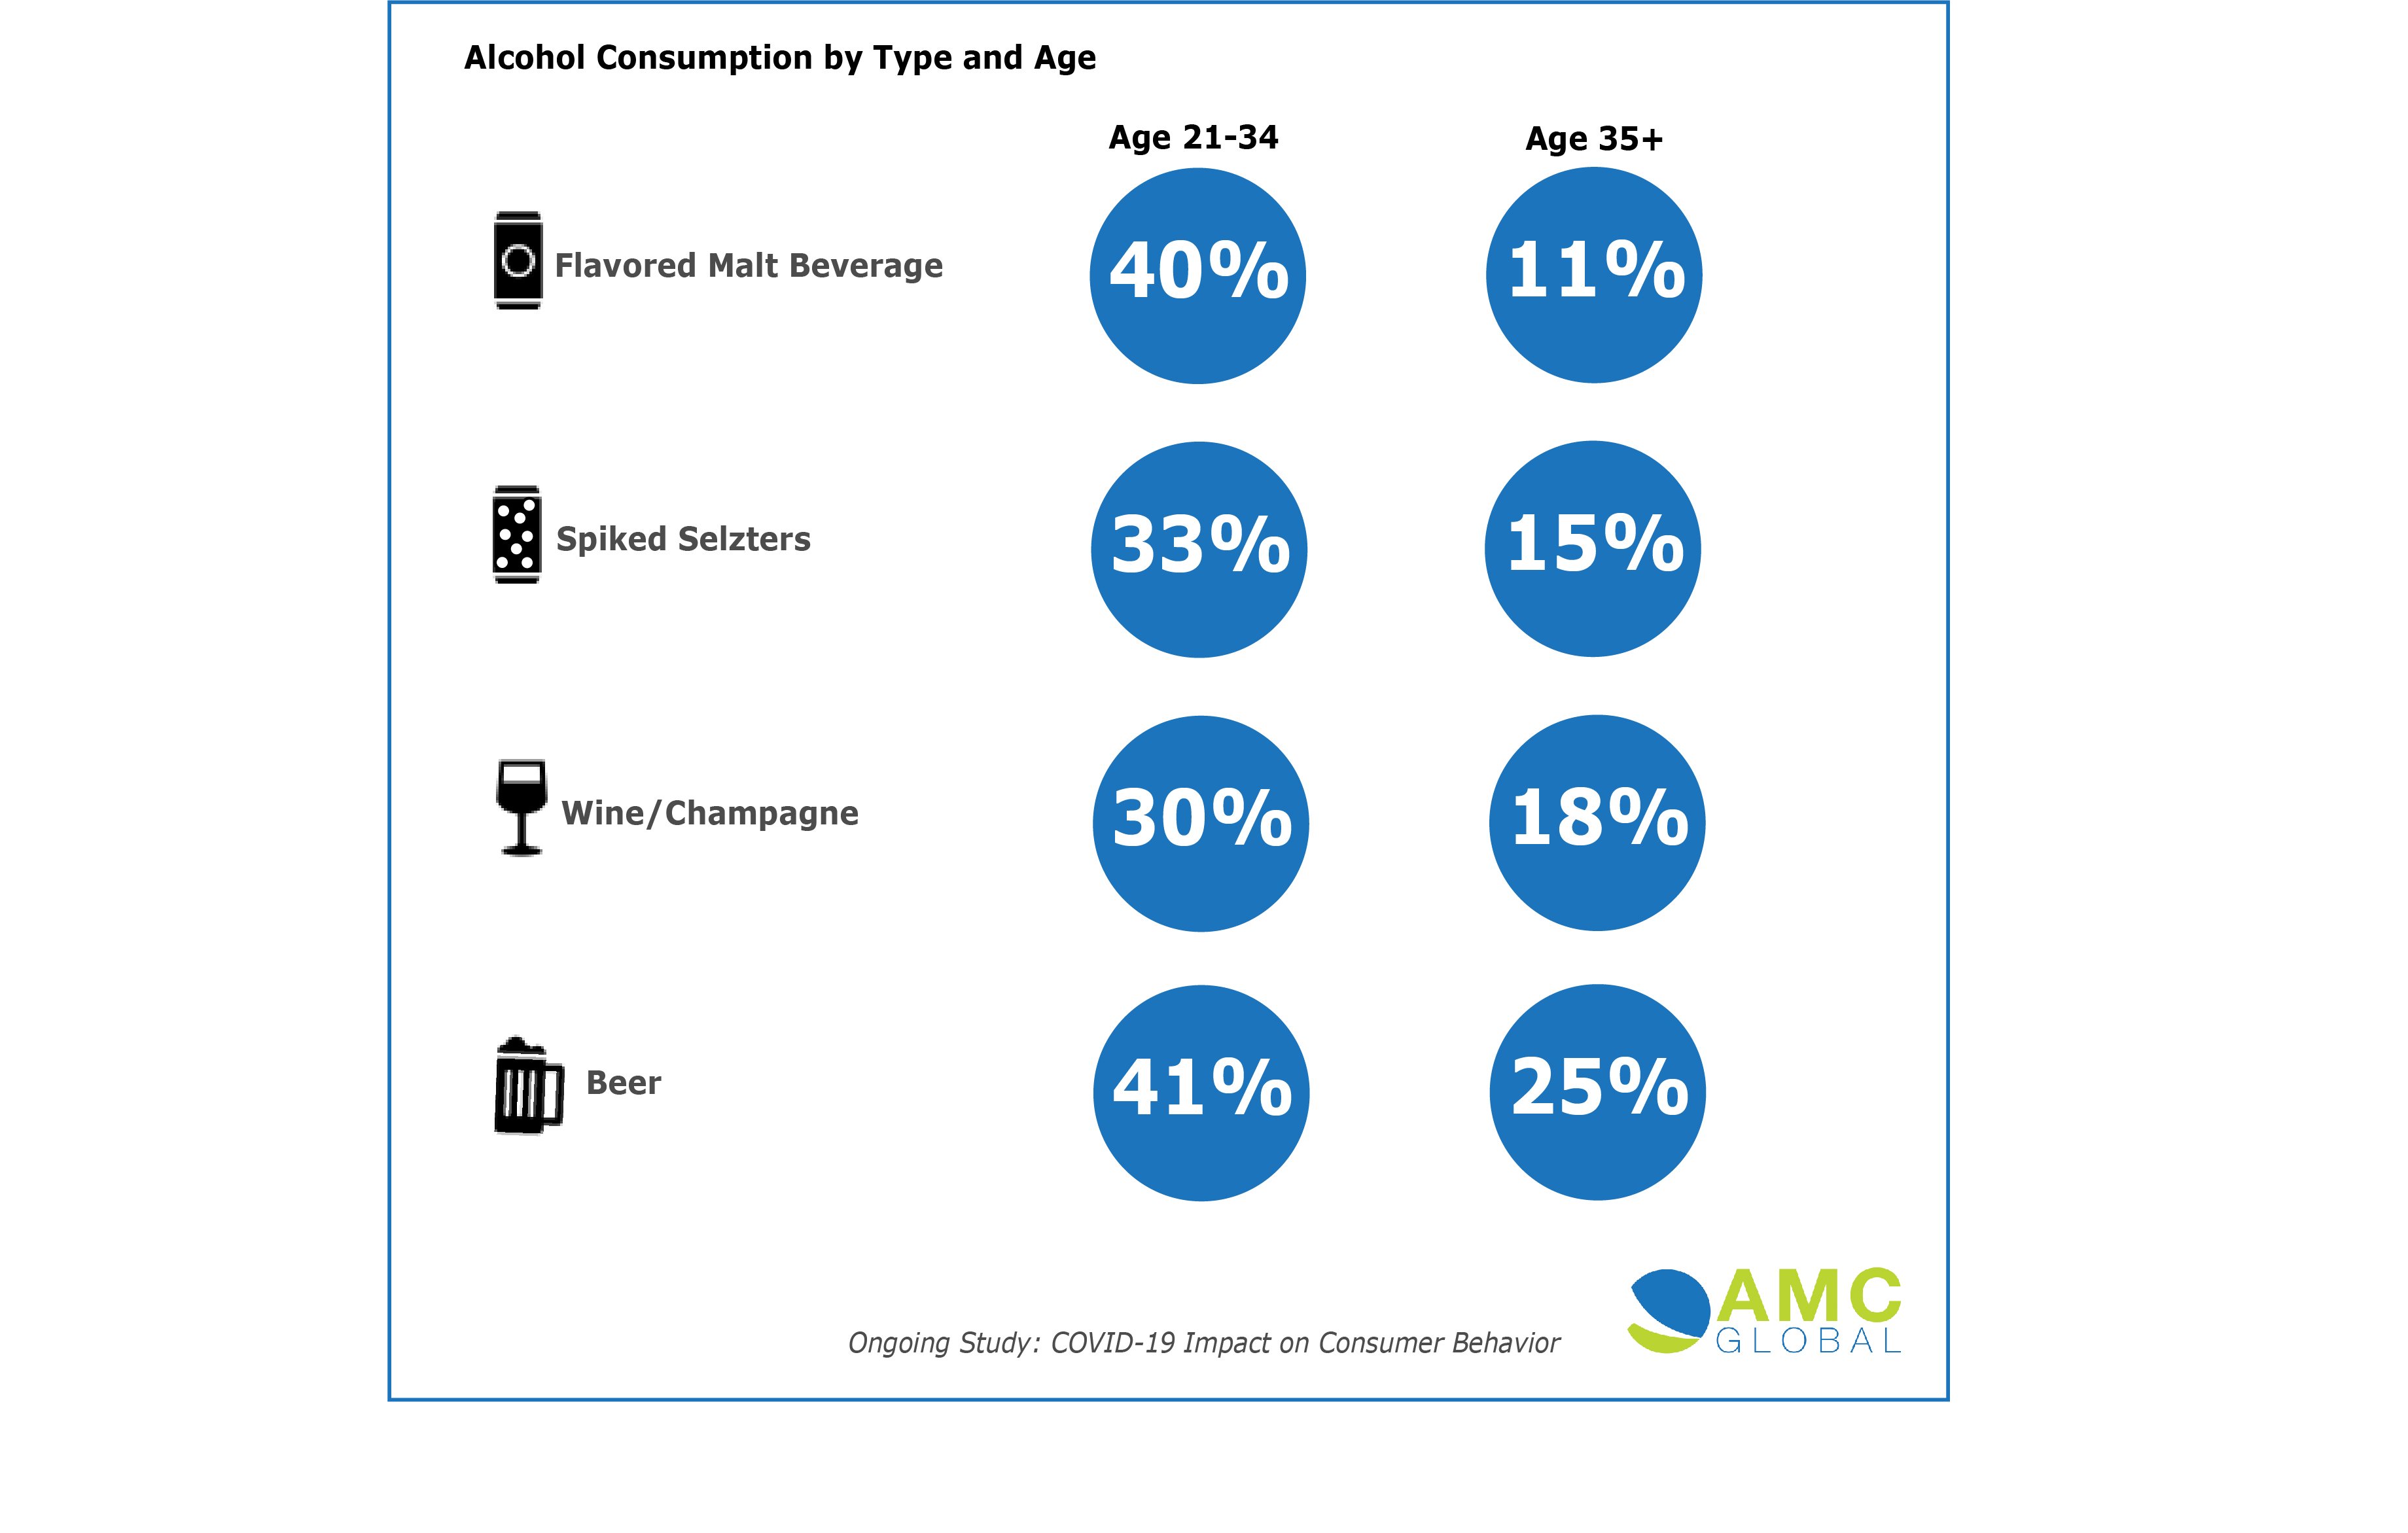 AMC Alcohol Consumption by Age